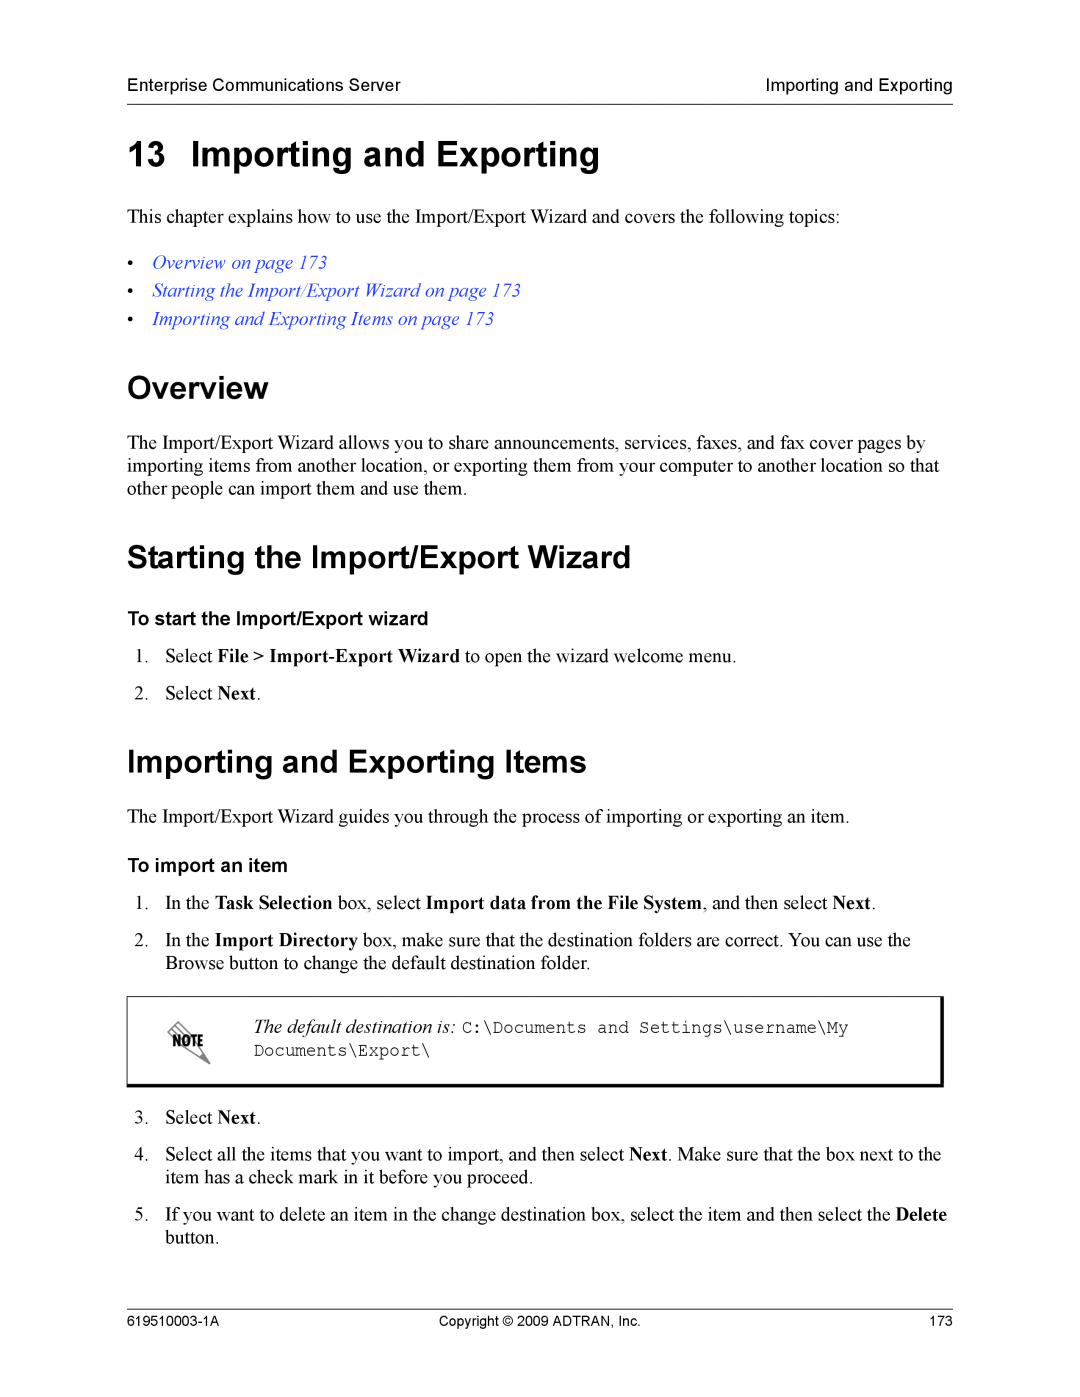 ADTRAN 619510003-1A Starting the Import/Export Wizard, Importing and Exporting Items, To import an item, Overview 